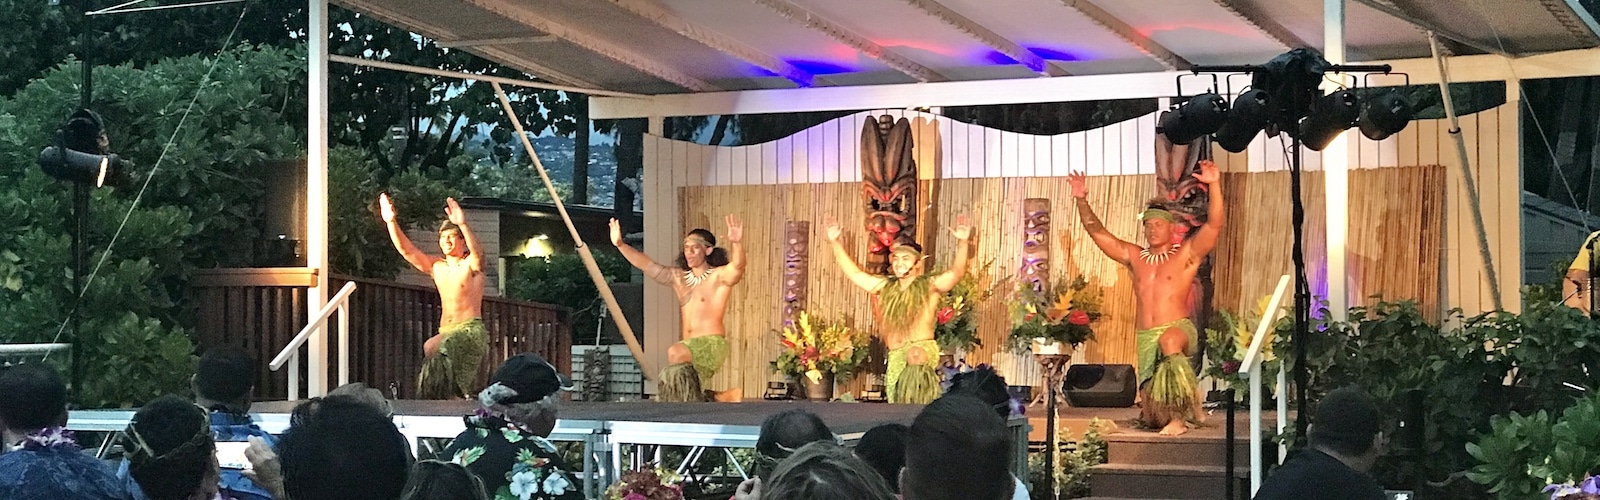 Diamond Head Luau, Hawaiian Luau, Best Oahu Tours & Activities